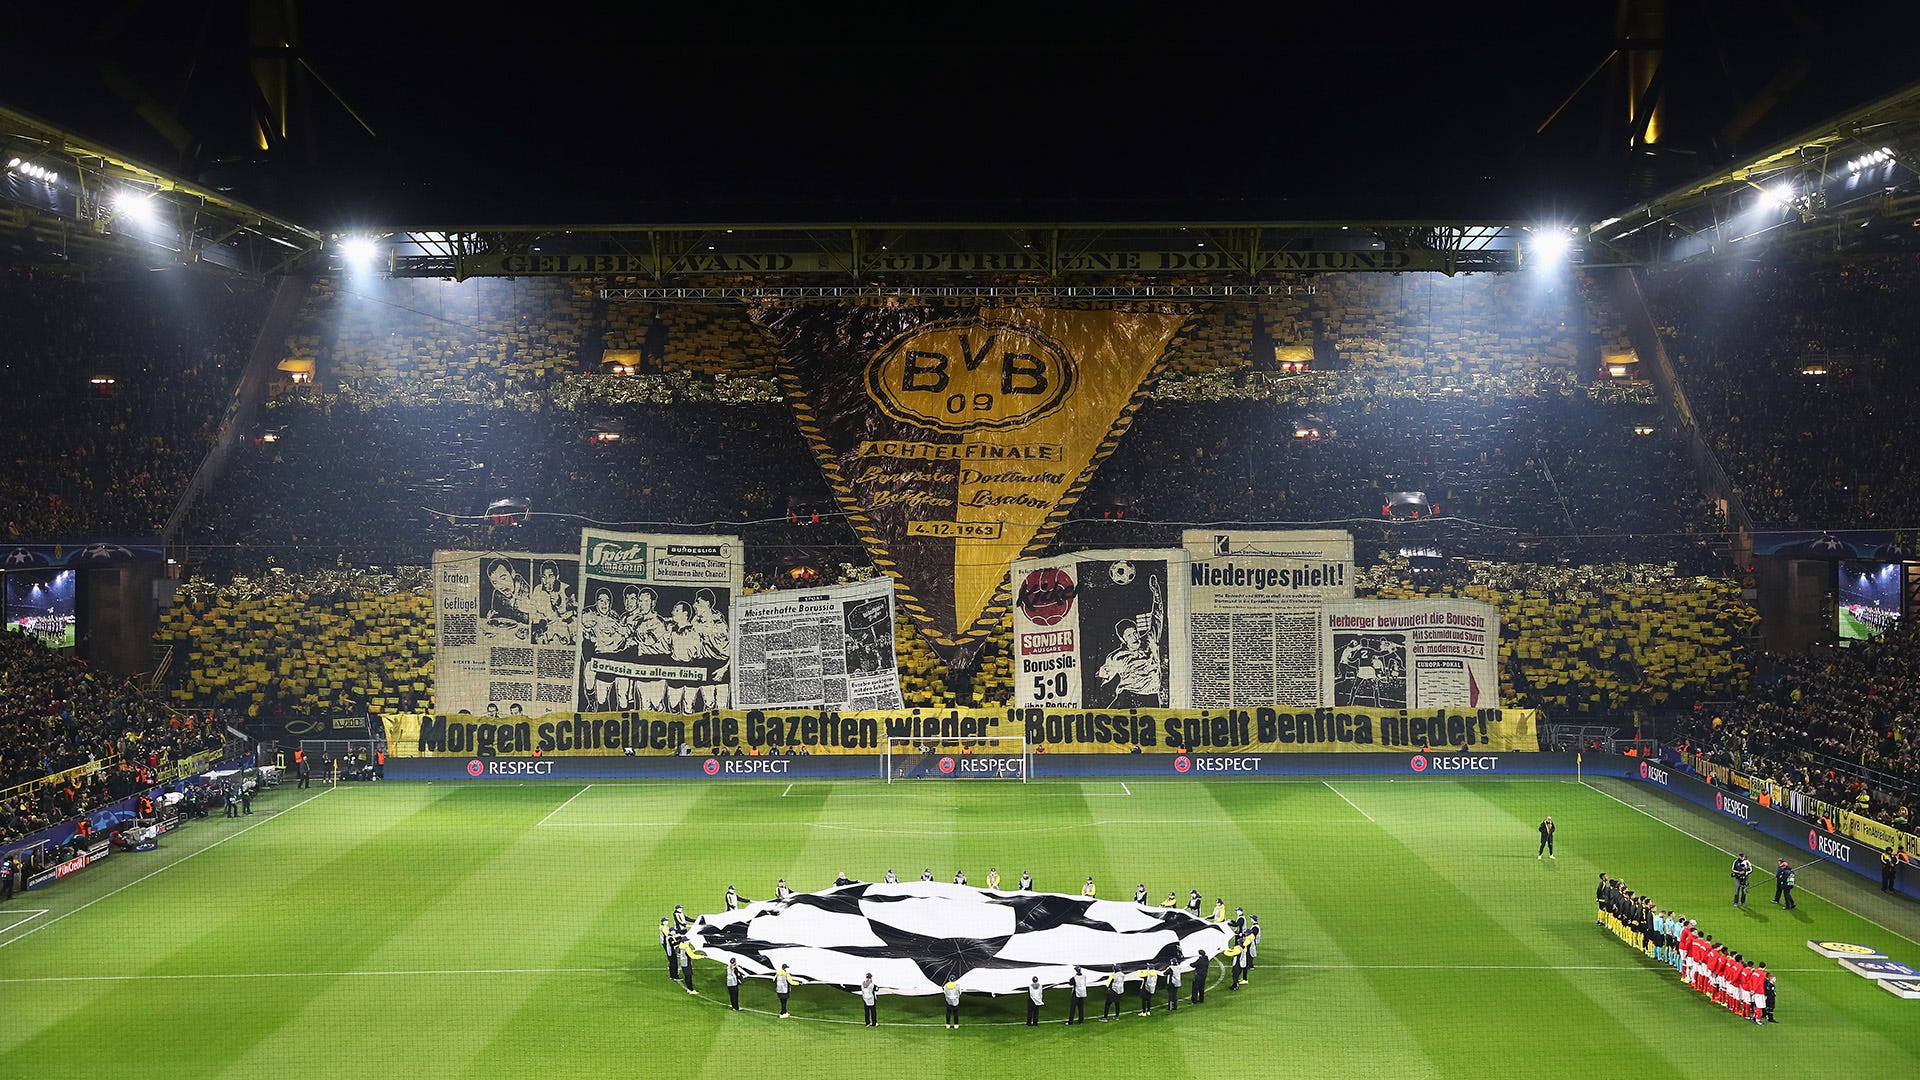 Borussia Dortmund Signal Iduna Park Westfalenstadion tifo